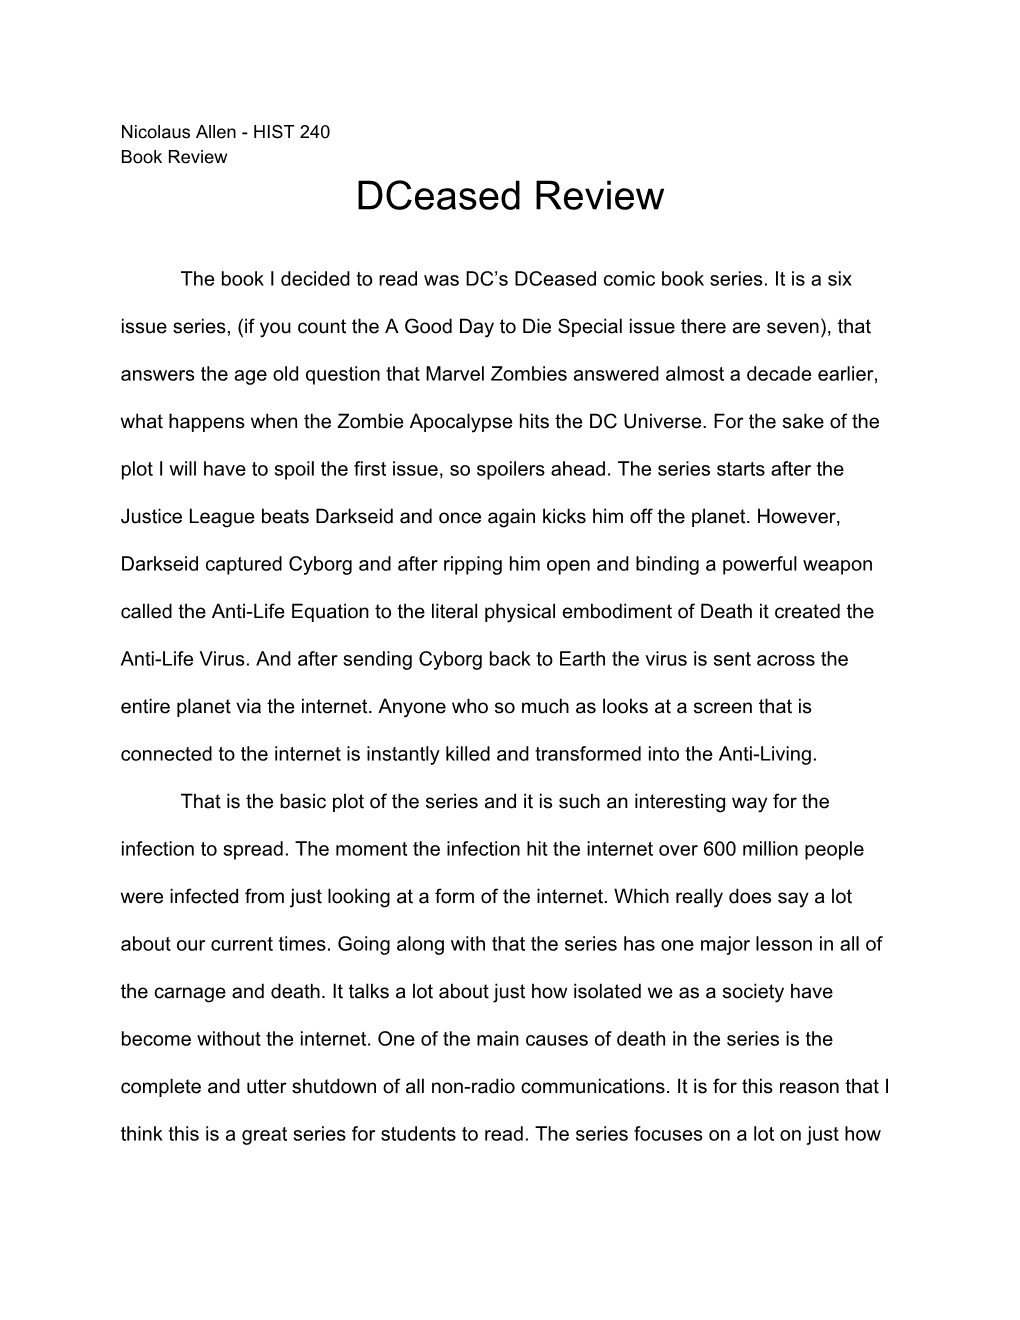 Dceased Review